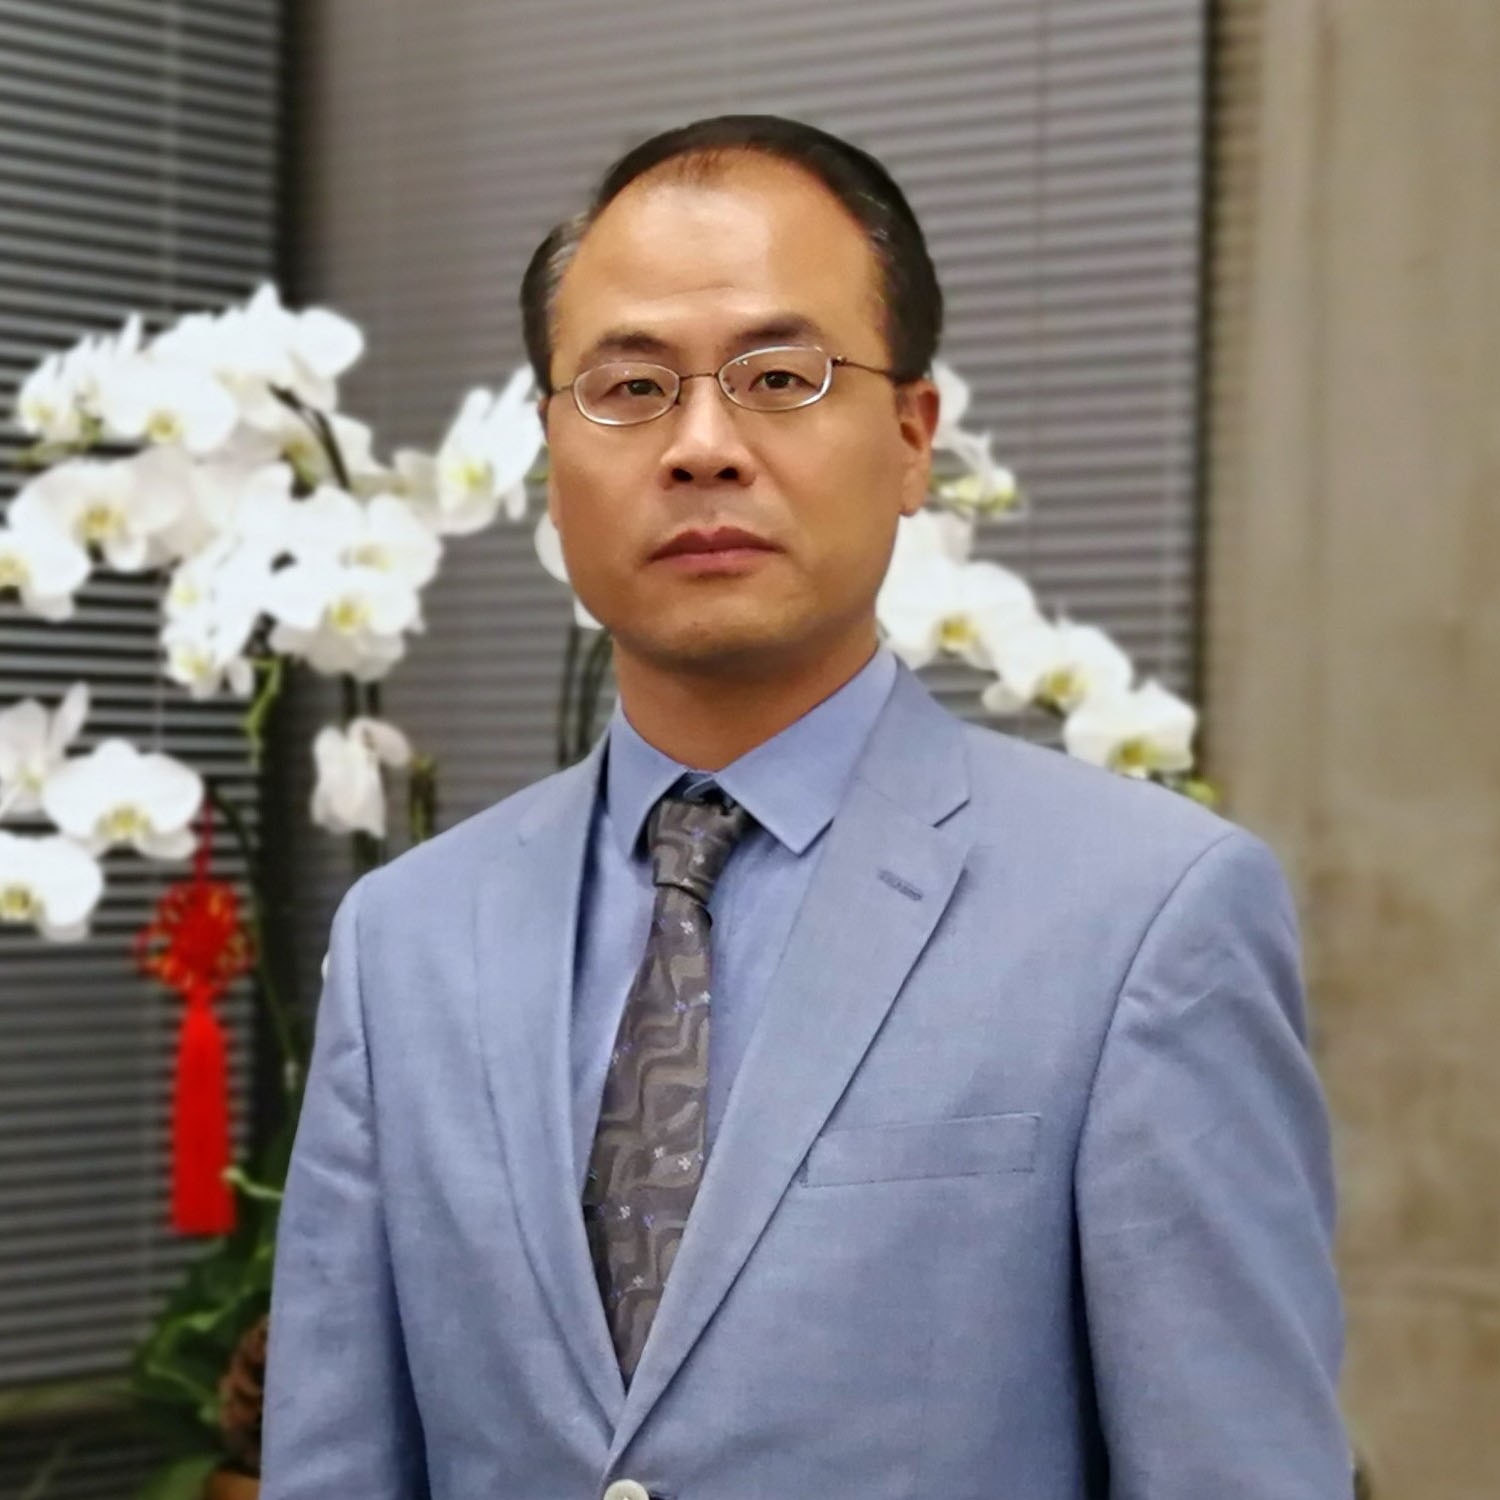 Dr. George Liu, Associate Professor